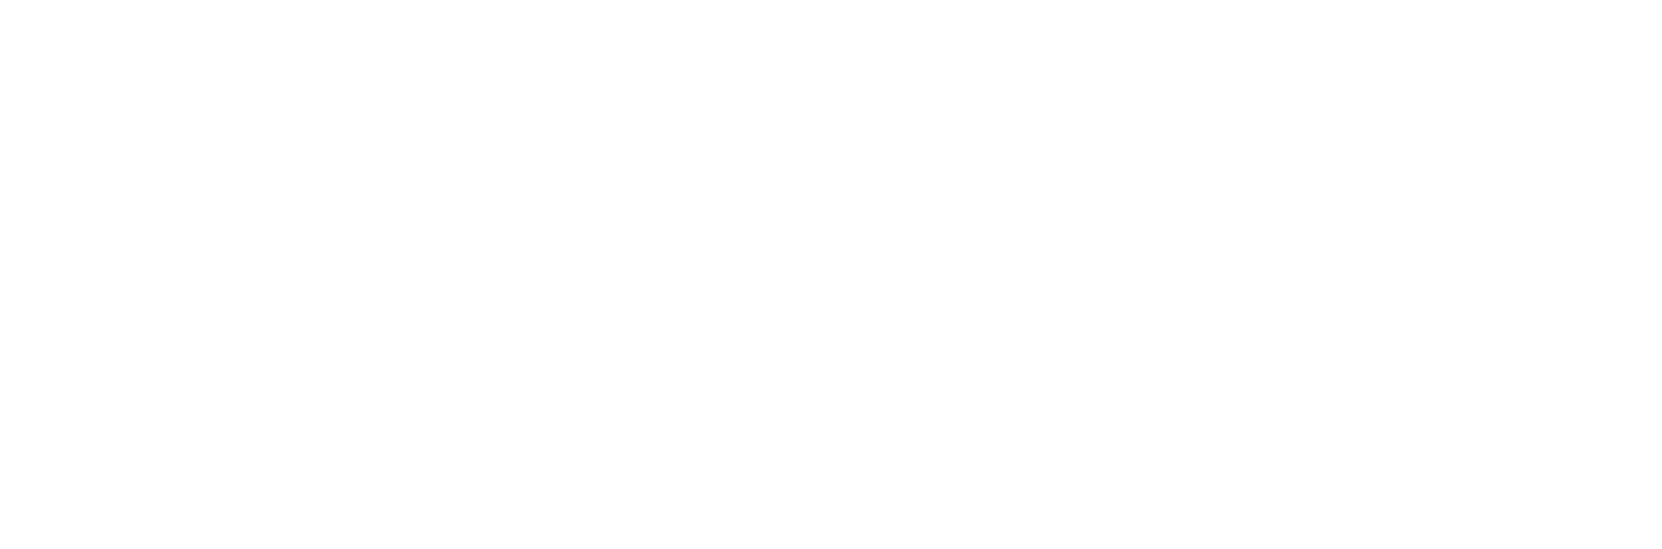 Stonedale Plant Hire Logo White Inline